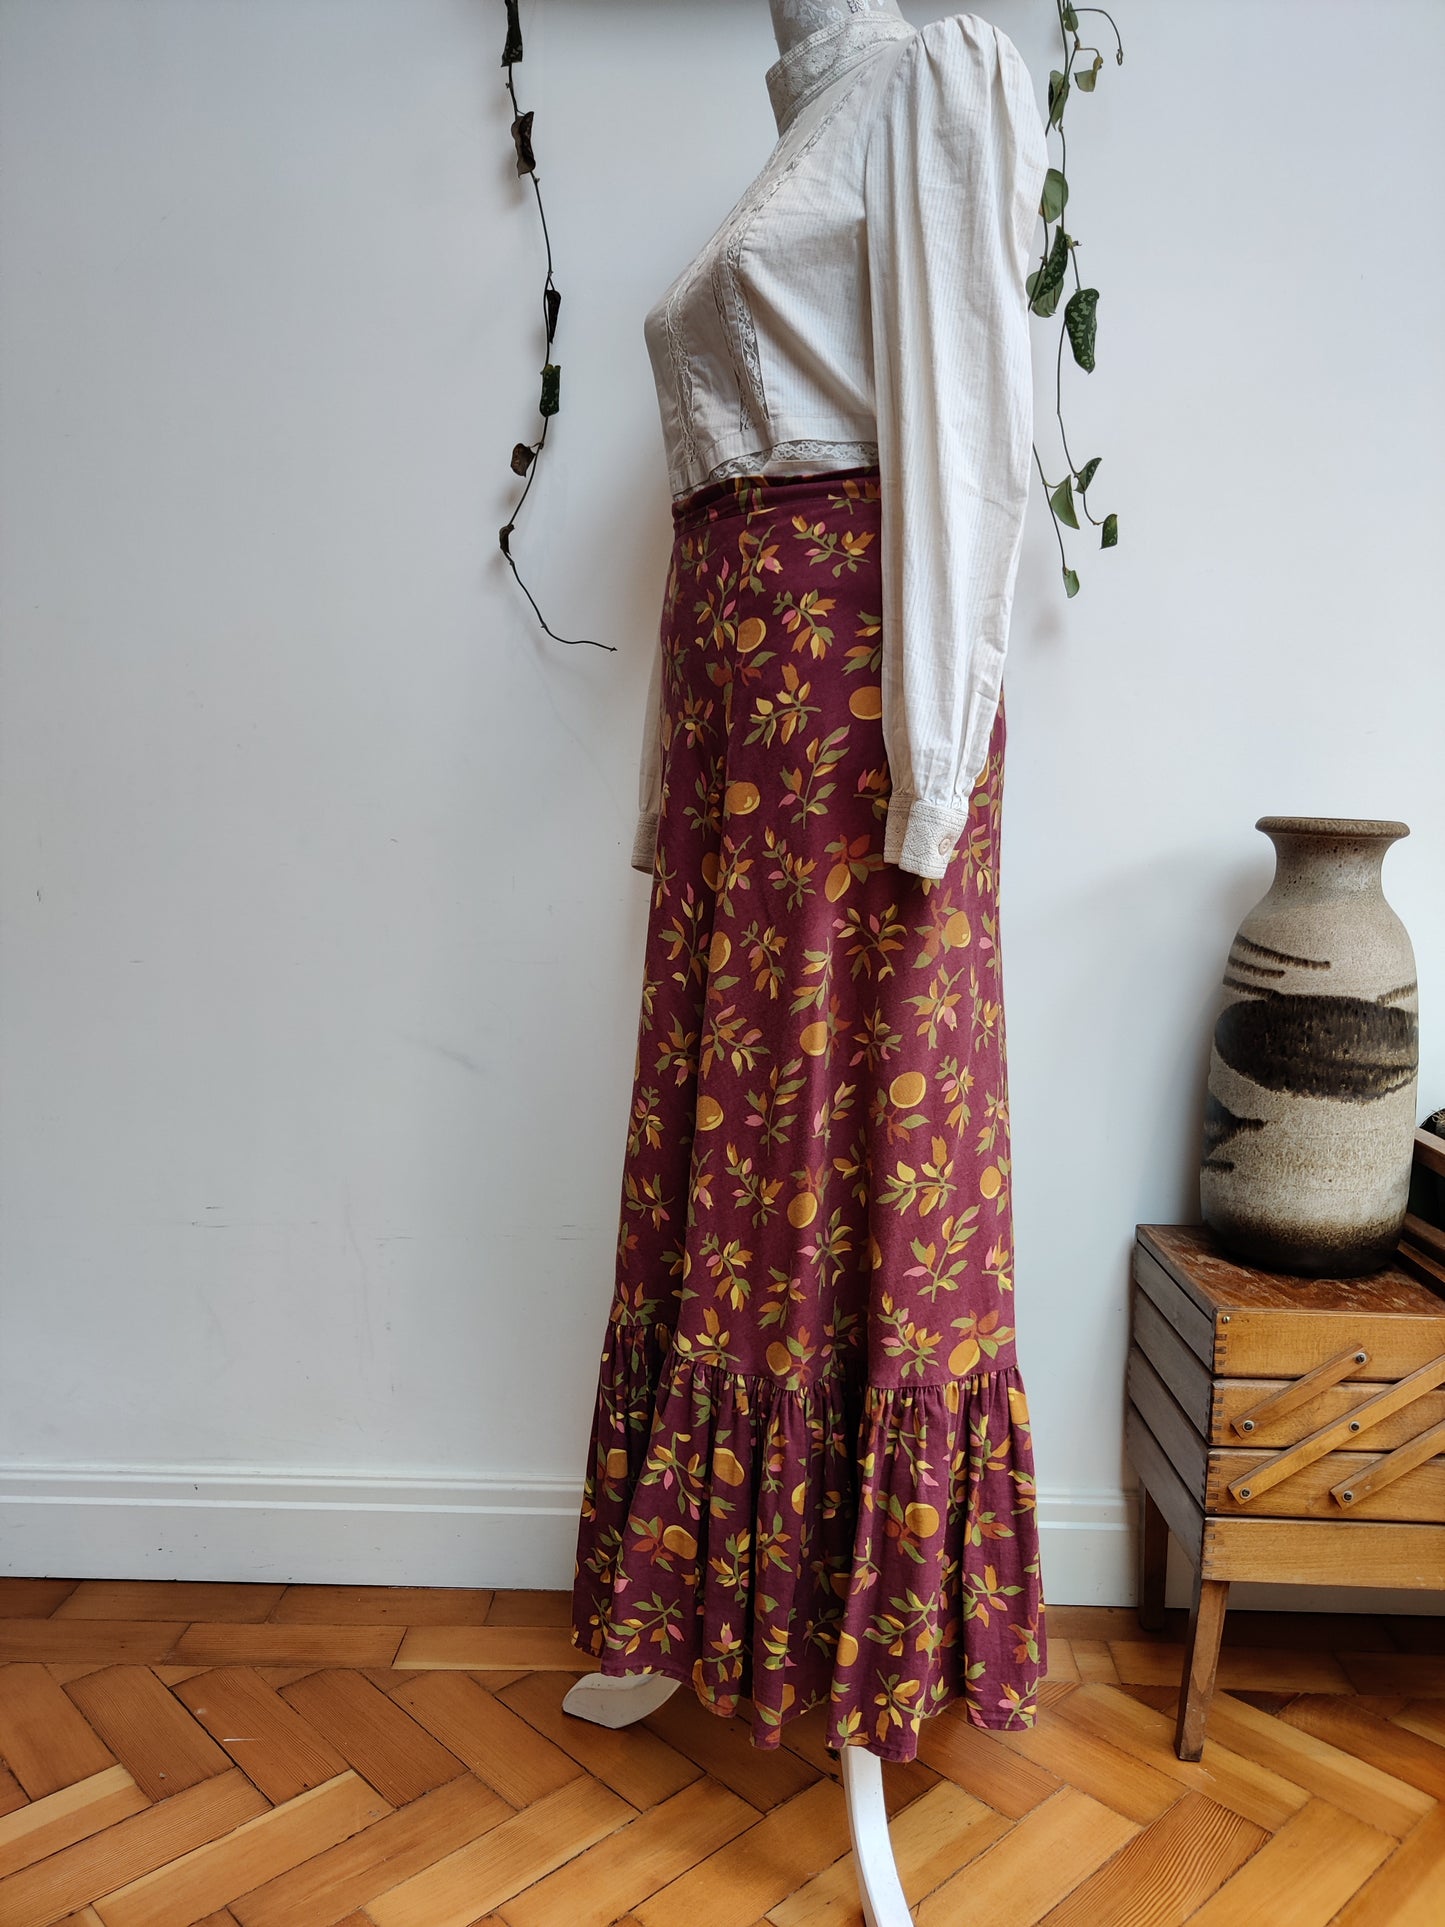 Stunning Laura Ashley Archive prairie skirt. Size 16.